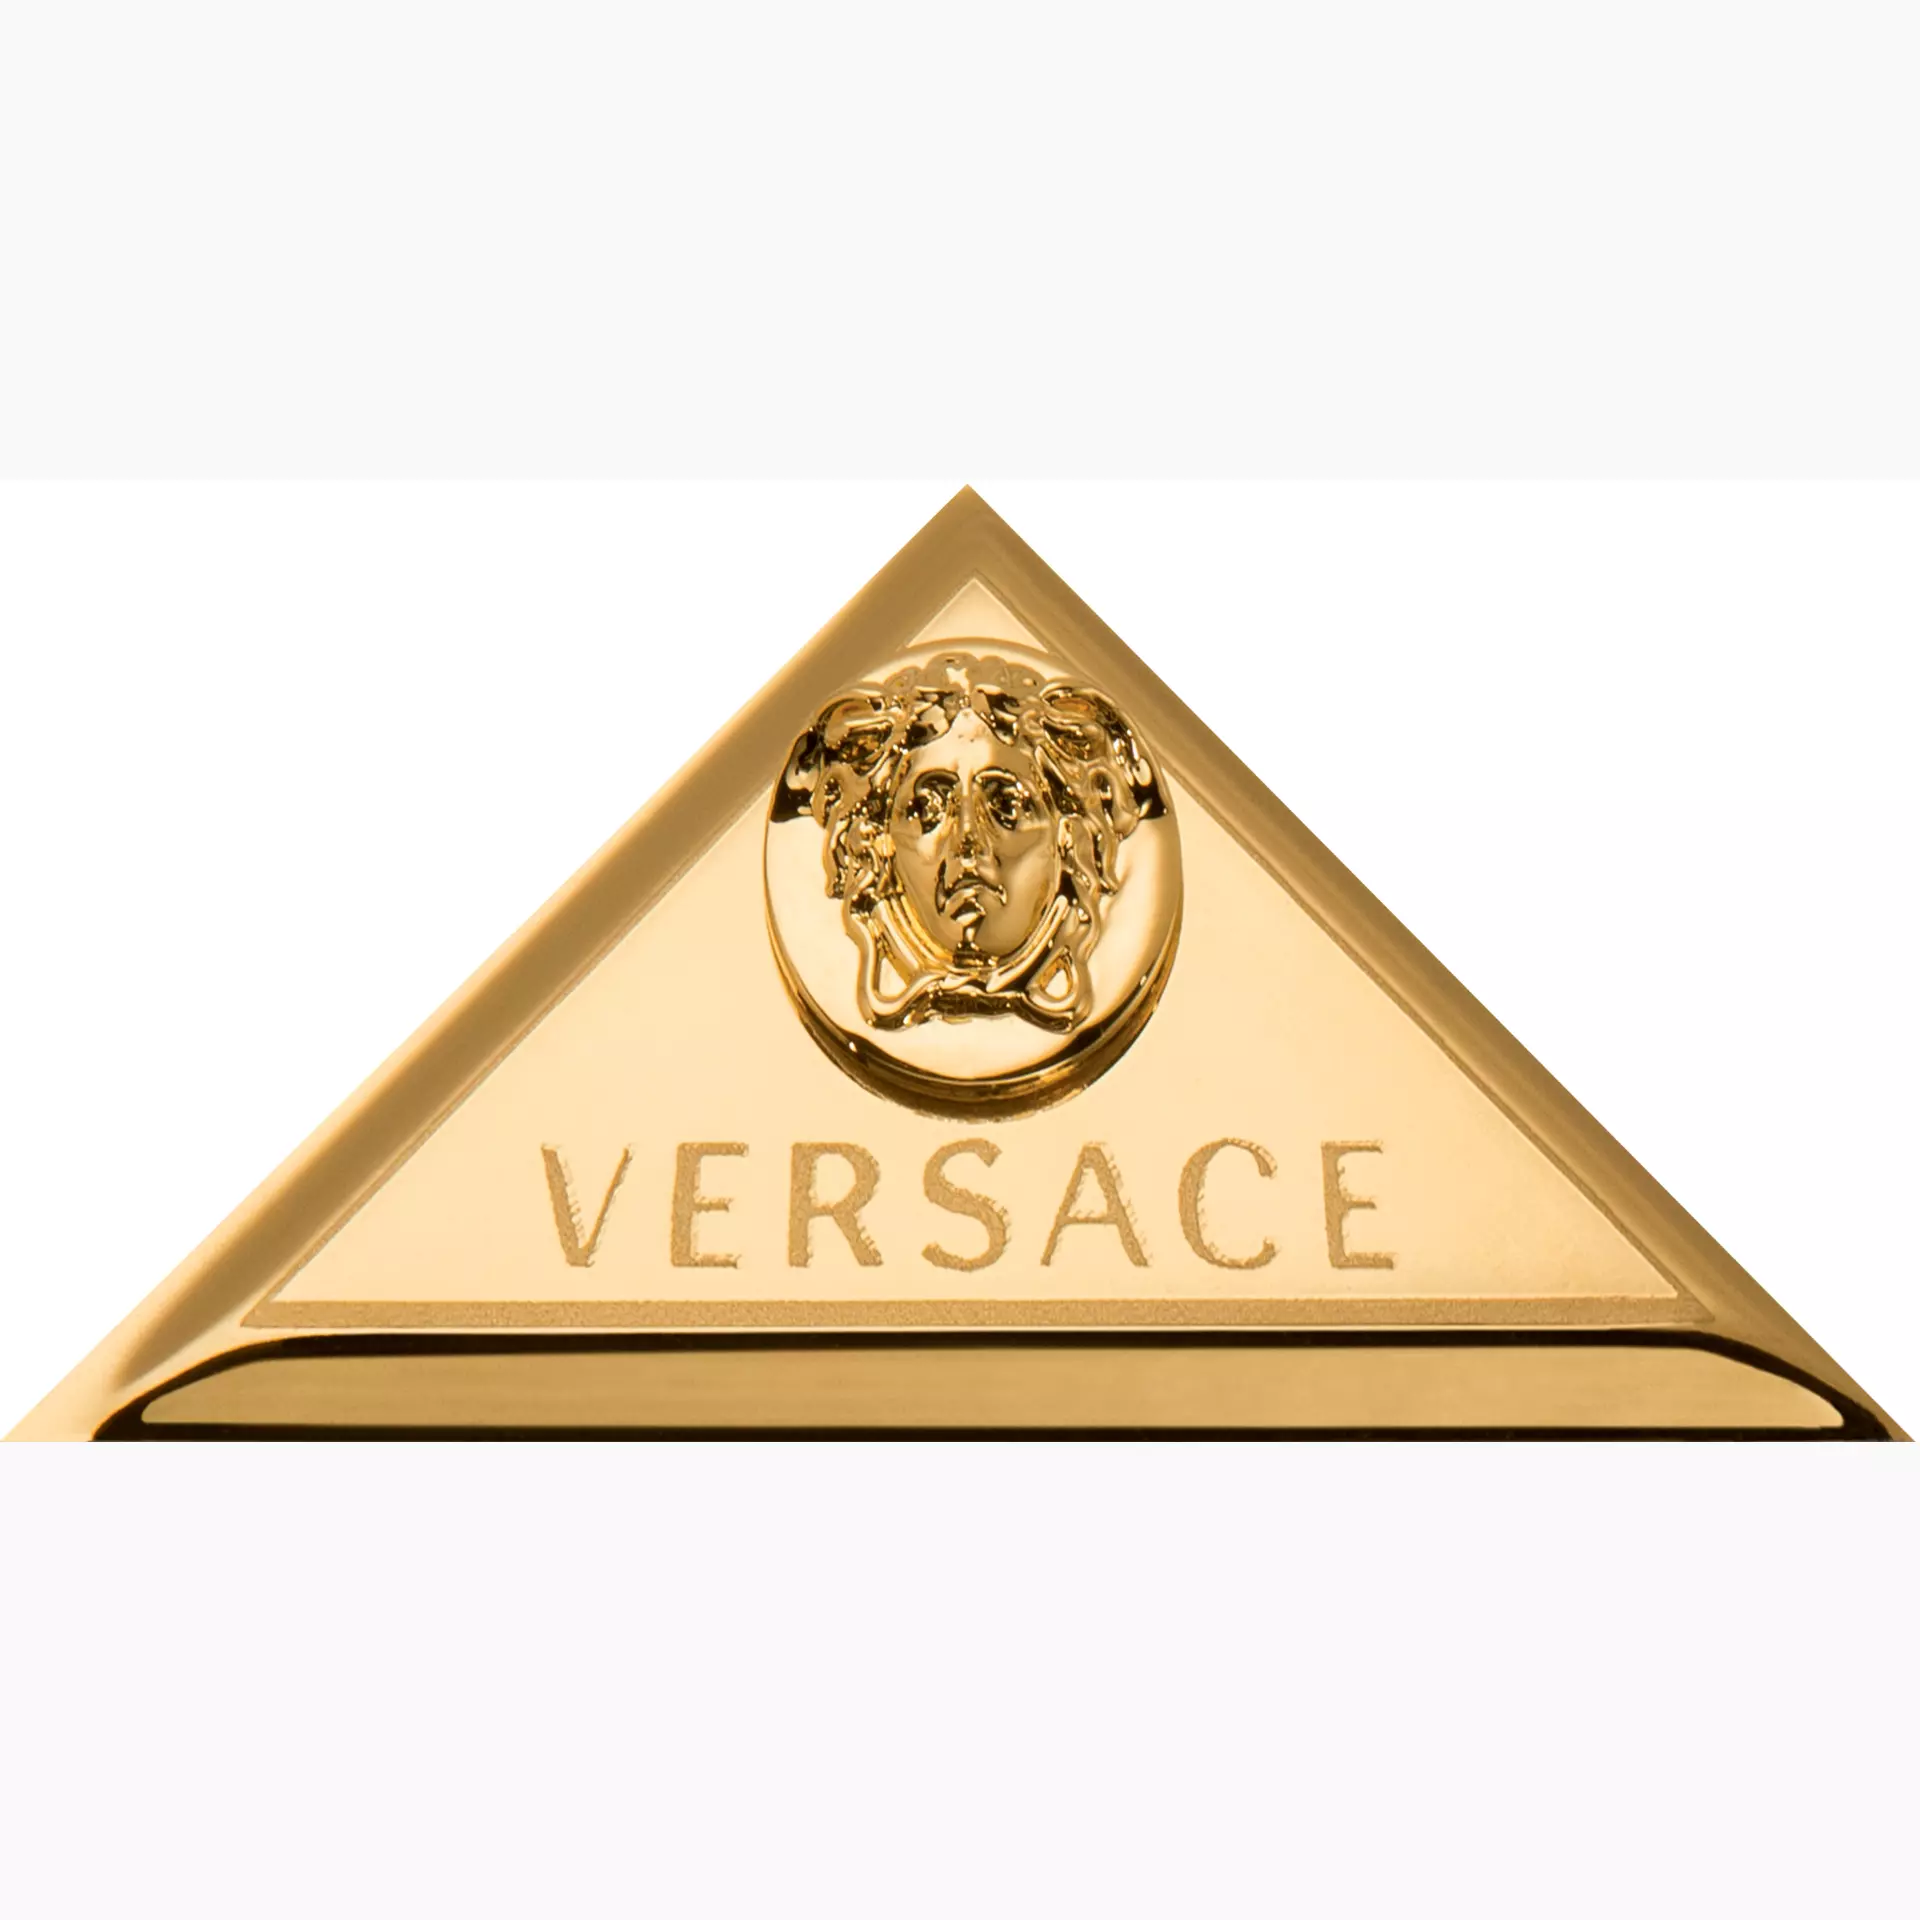 Versace Firma Gold Pvd Naturale Triangolo Medusa G0068970 4,5x8,7cm